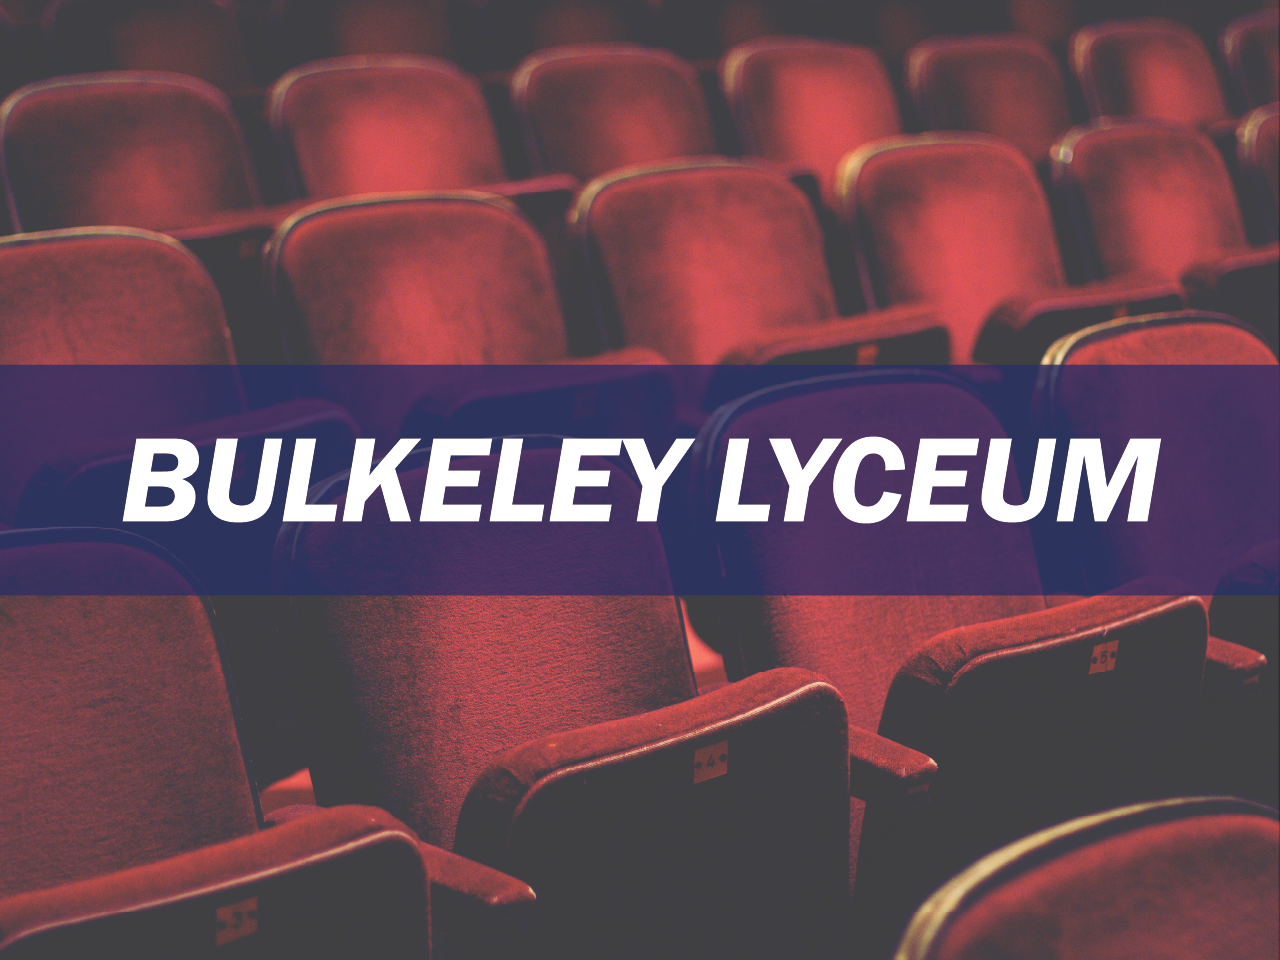 Bulkeley Lyceum